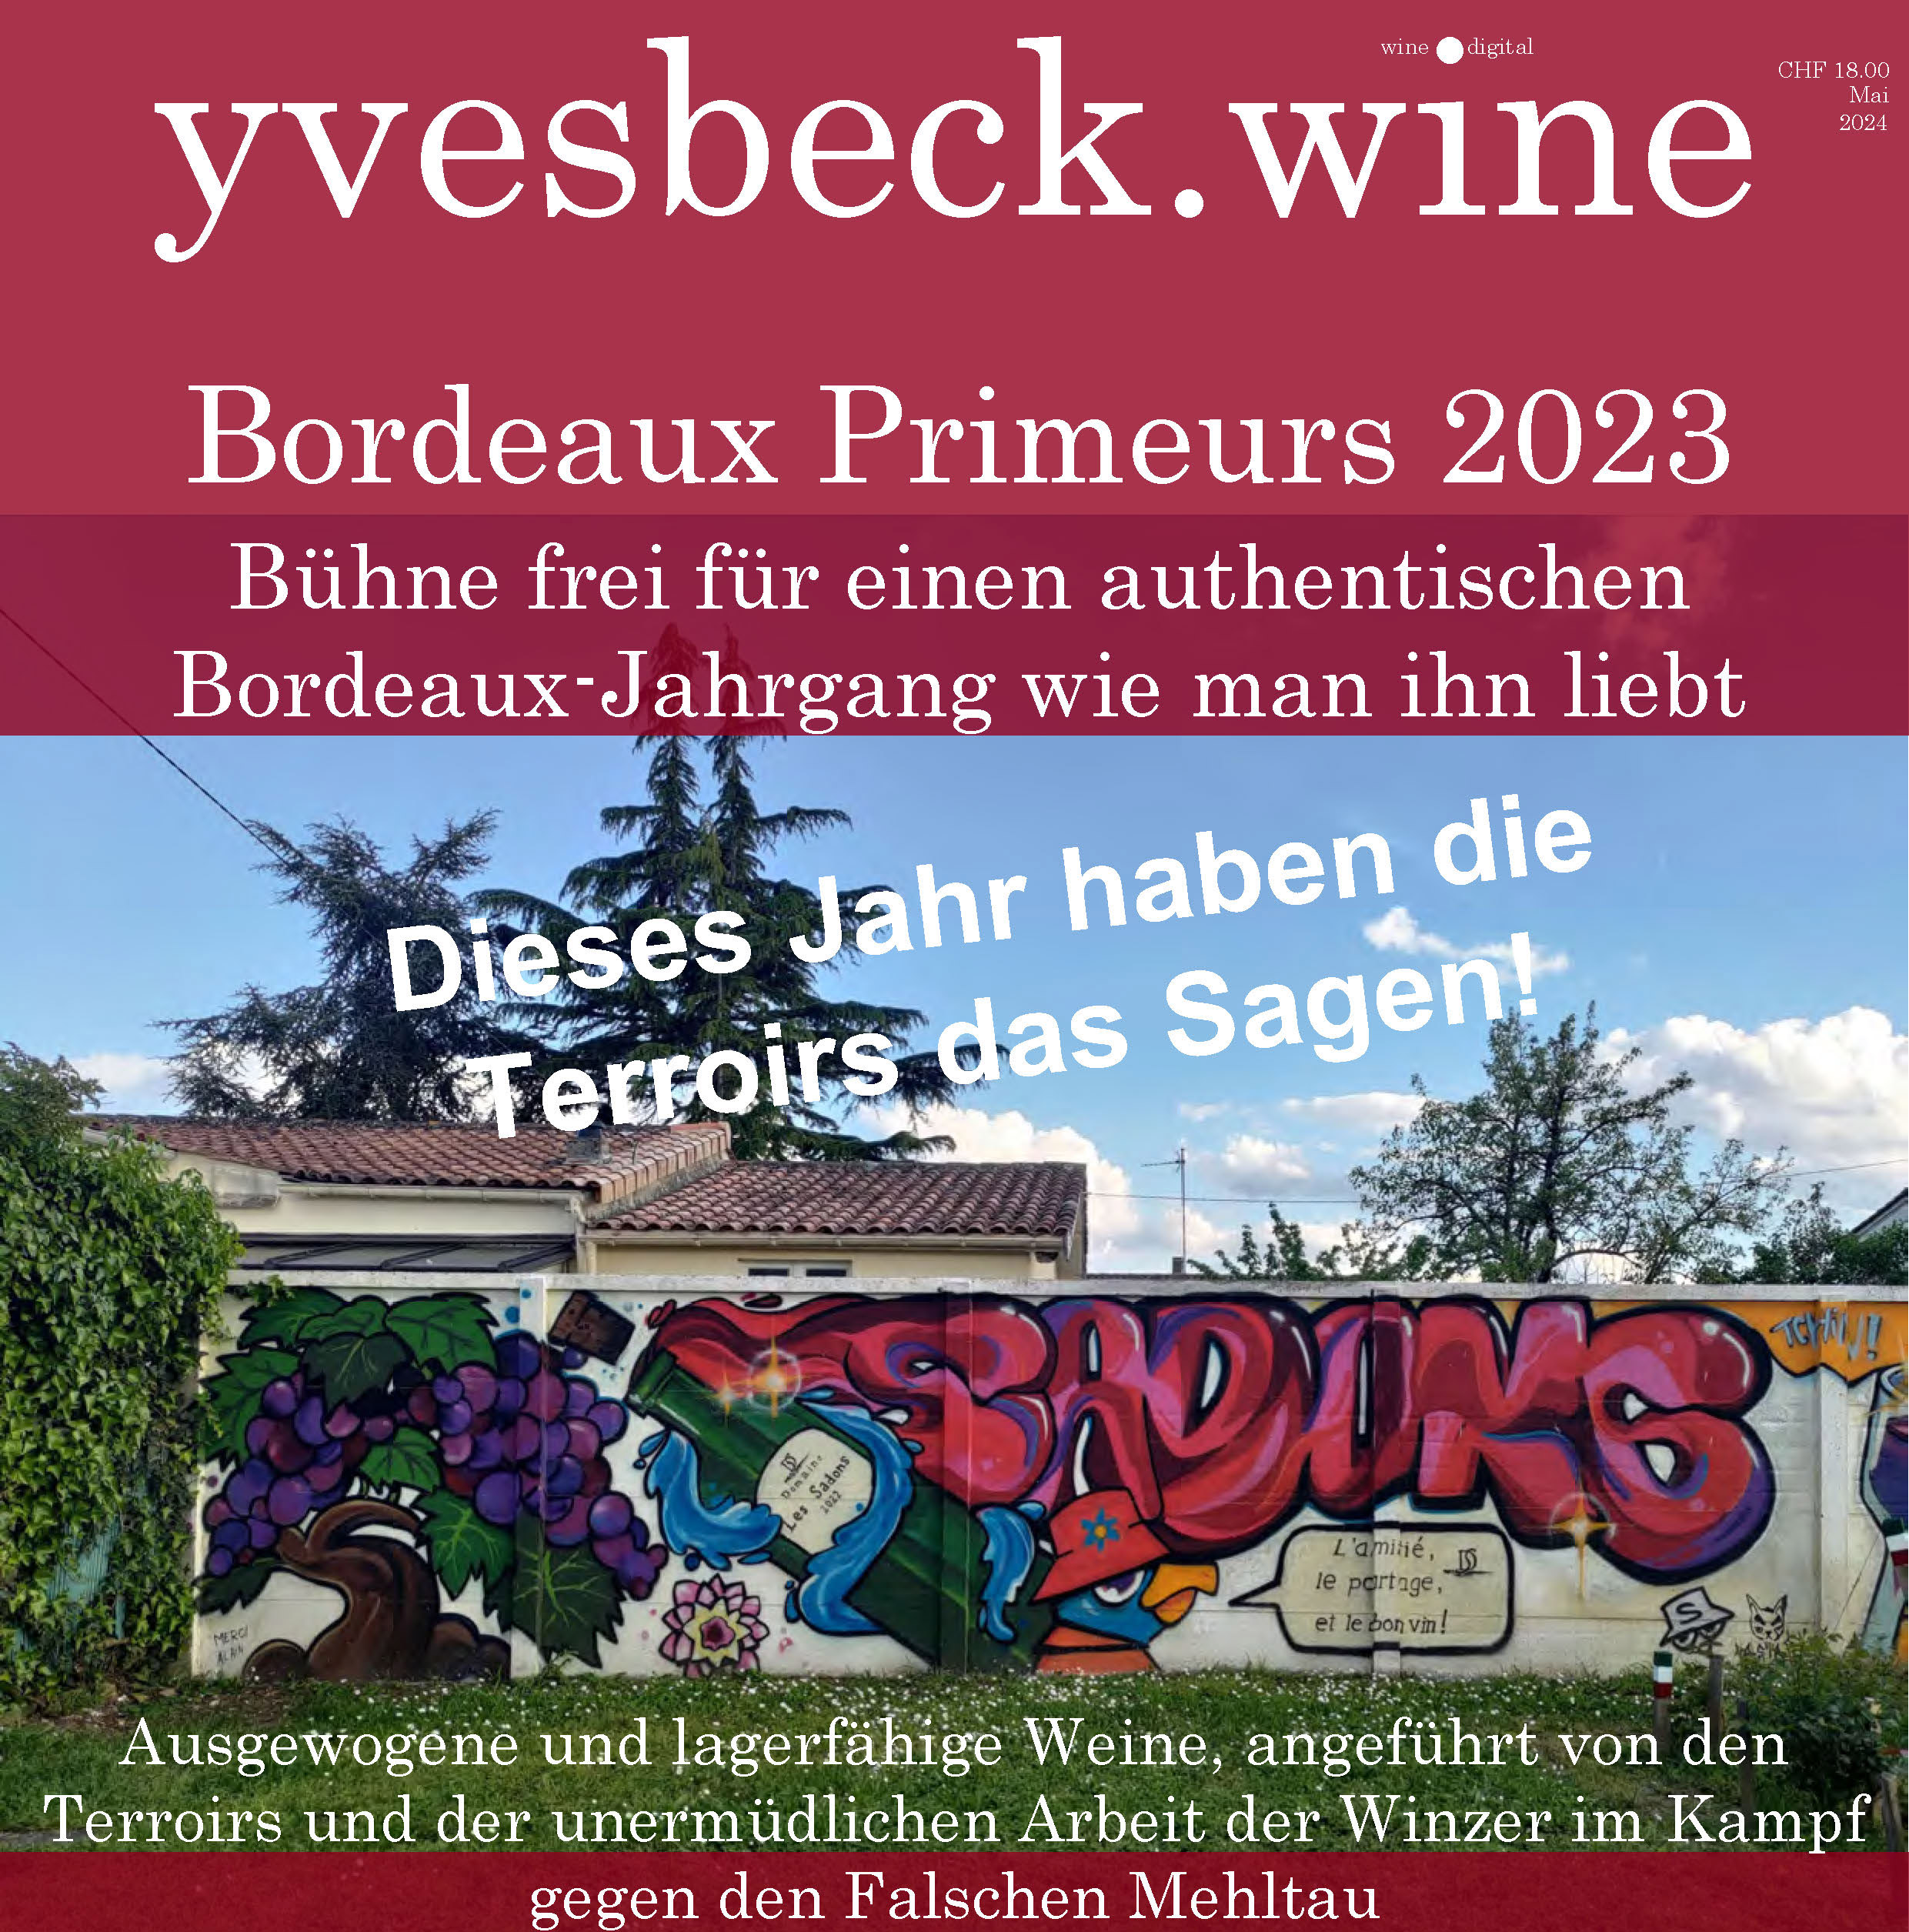 Bordeaux Primeurs 2023 - yvesbeck.wine